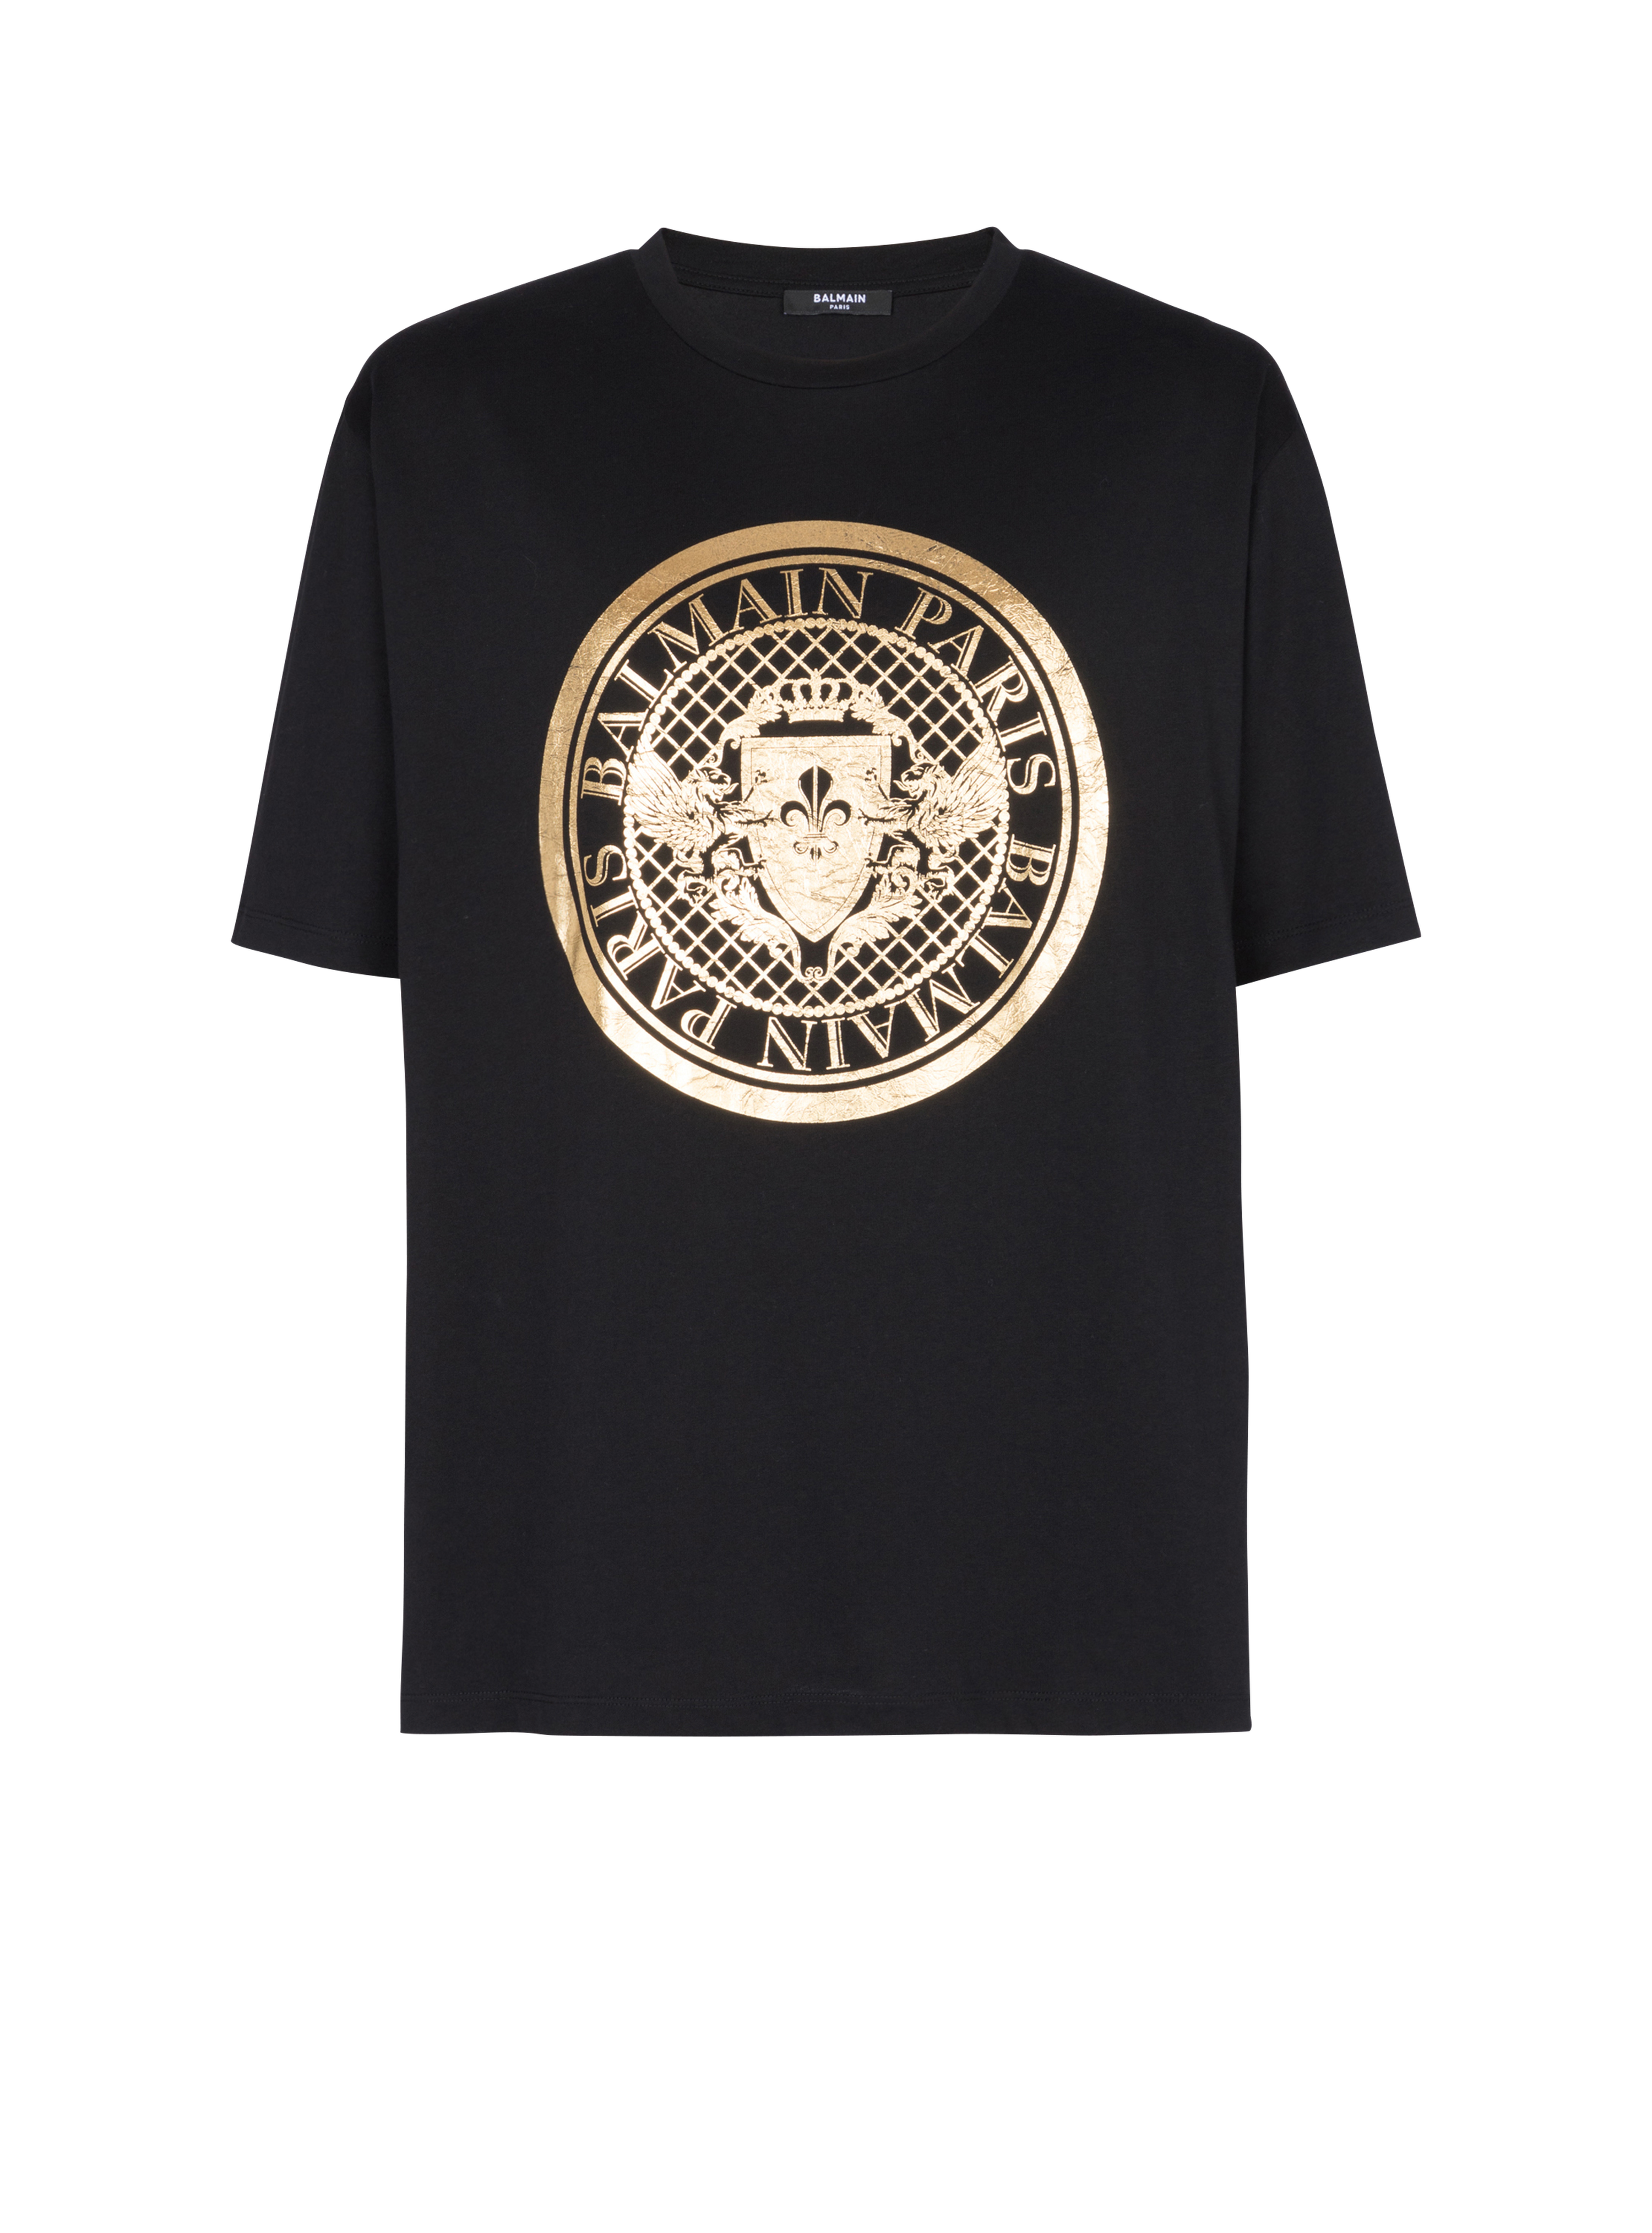 Cotton T-shirt with metallic coin logo print, gold